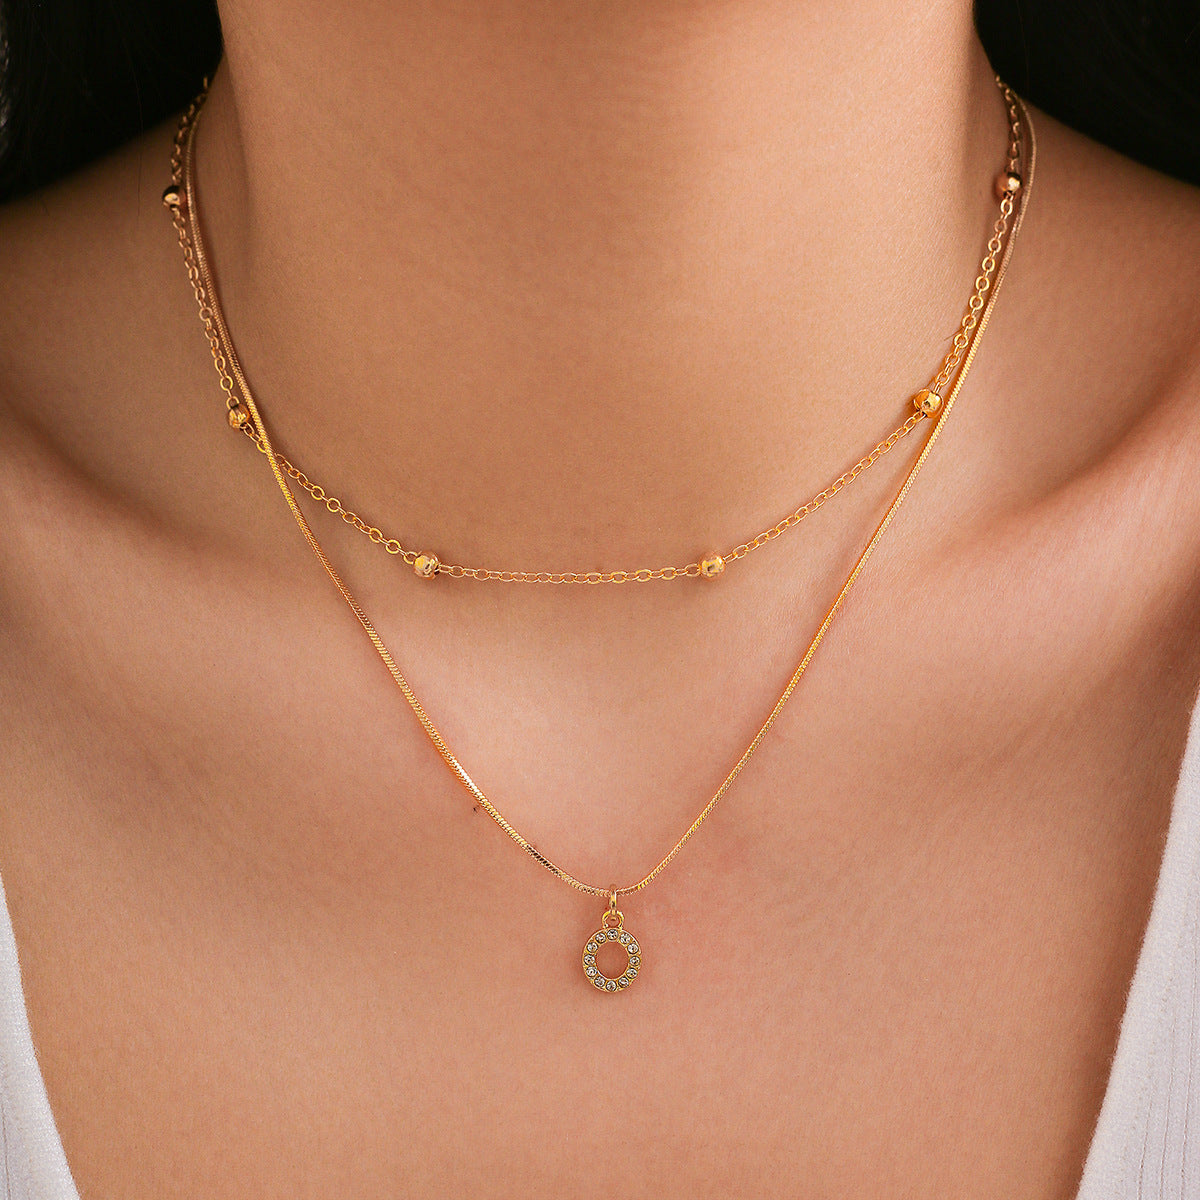 Elegant Diamond-Lined Letter Pendant Necklace with Snake Bone Chain